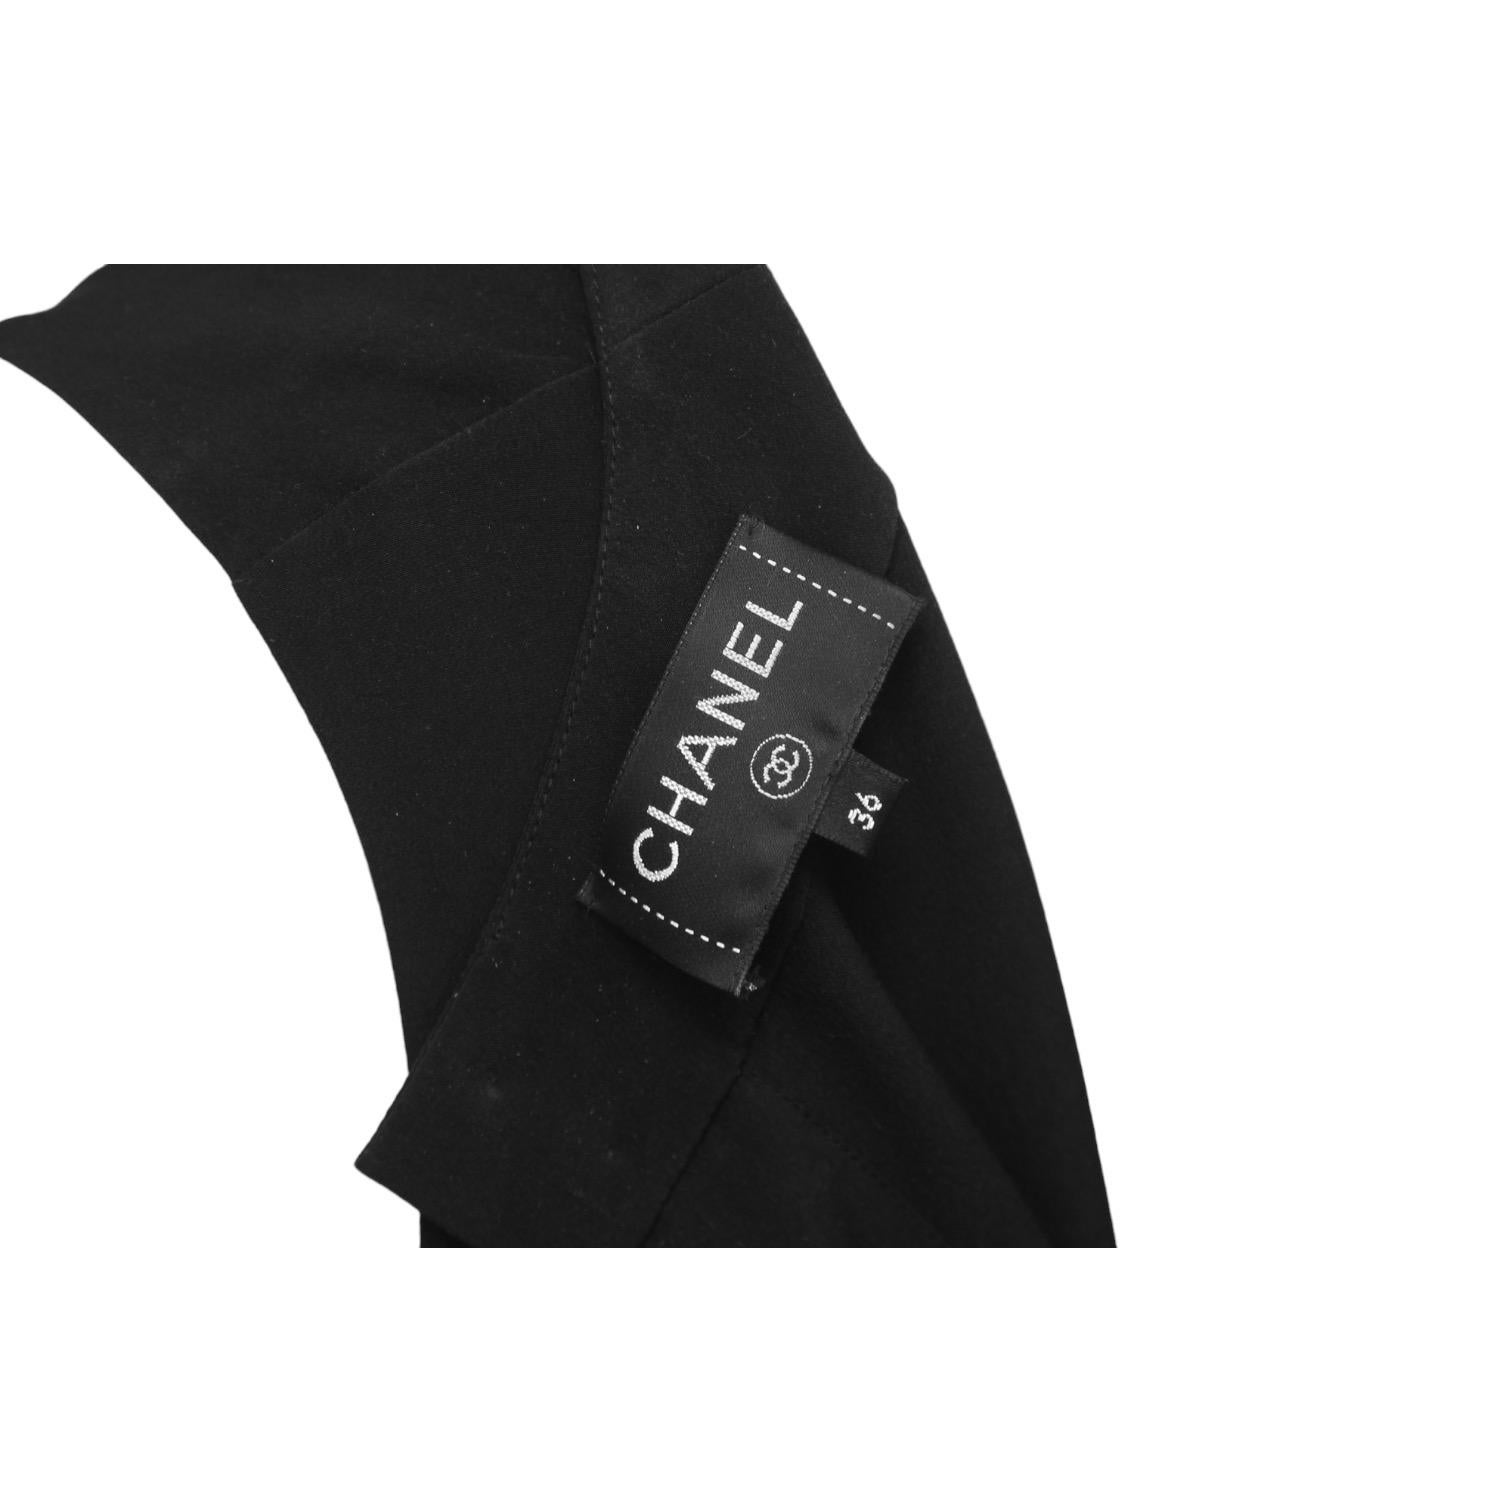 CHANEL Black Silk Blouse Sleeveless Top Shirt Pleats V-Neck Buttons Sz 36 For Sale 3